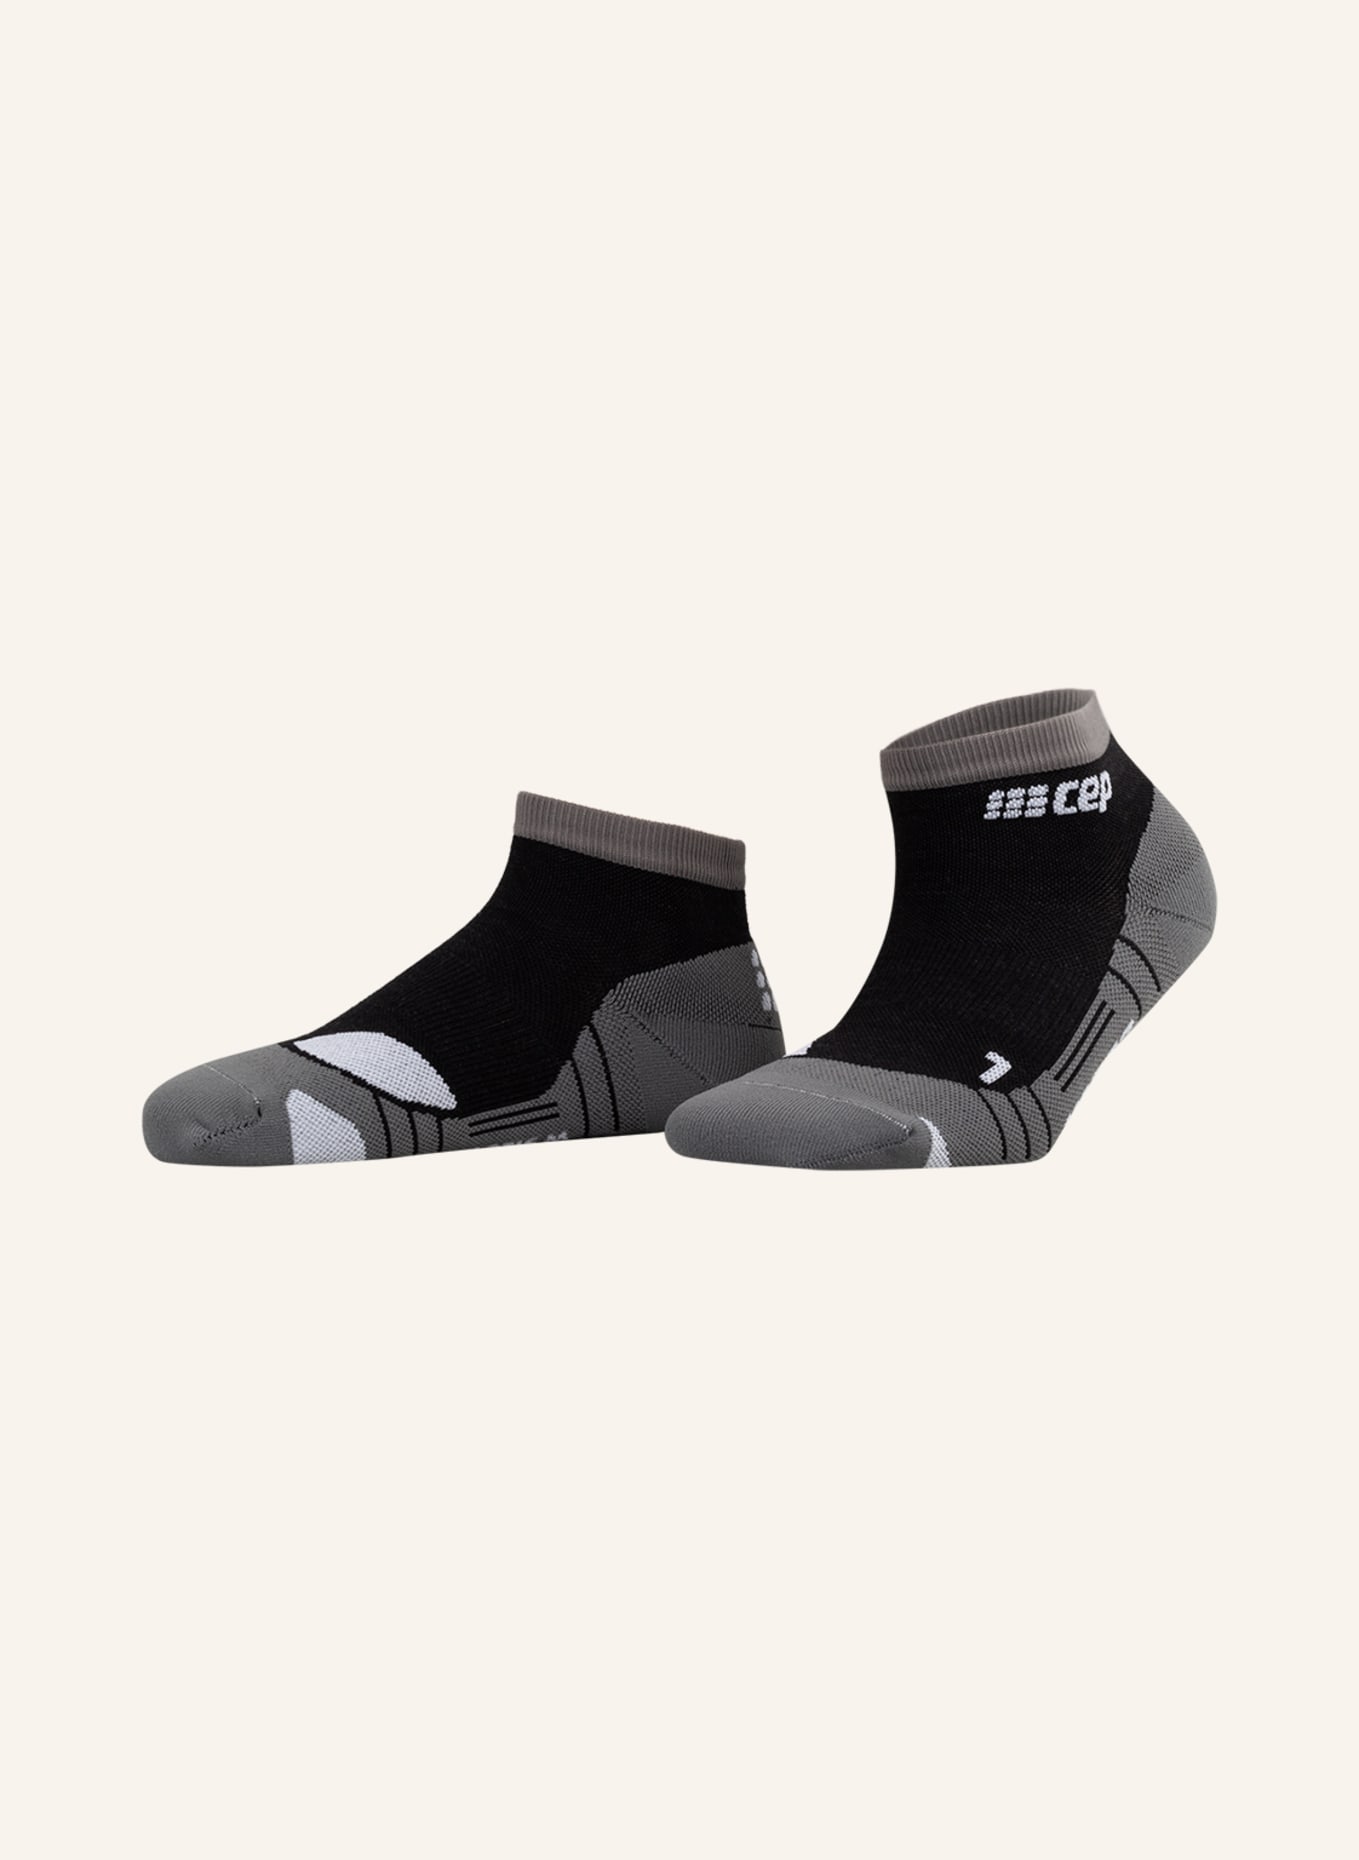 cep Trekking-Socken COMPRESSION LIGHT, Farbe: stonegrey / grey *NEW* (Bild 1)